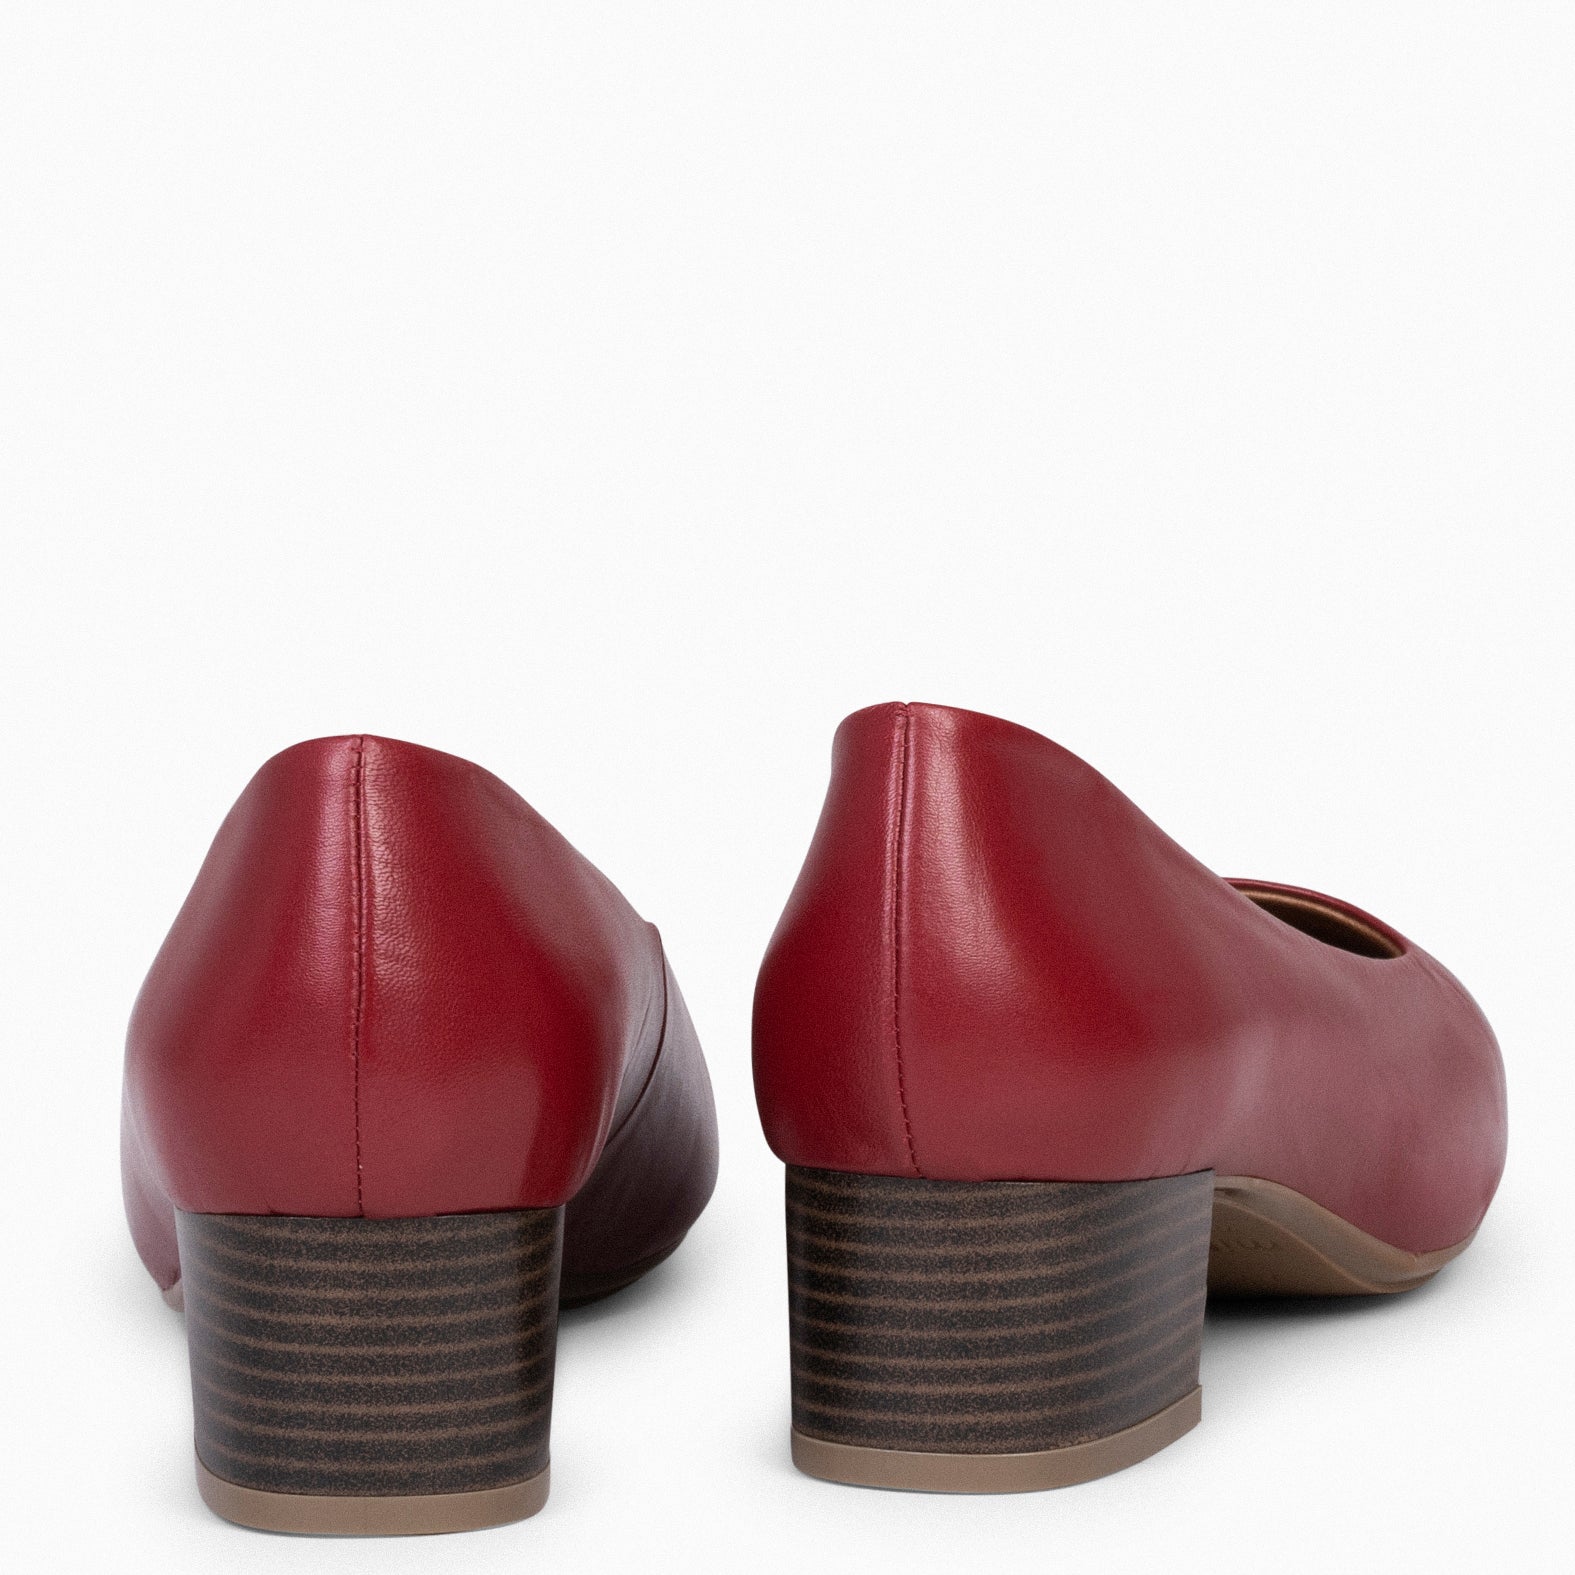 URBAN LADY - Chaussures à talon bas en cuir nappa GRENAT